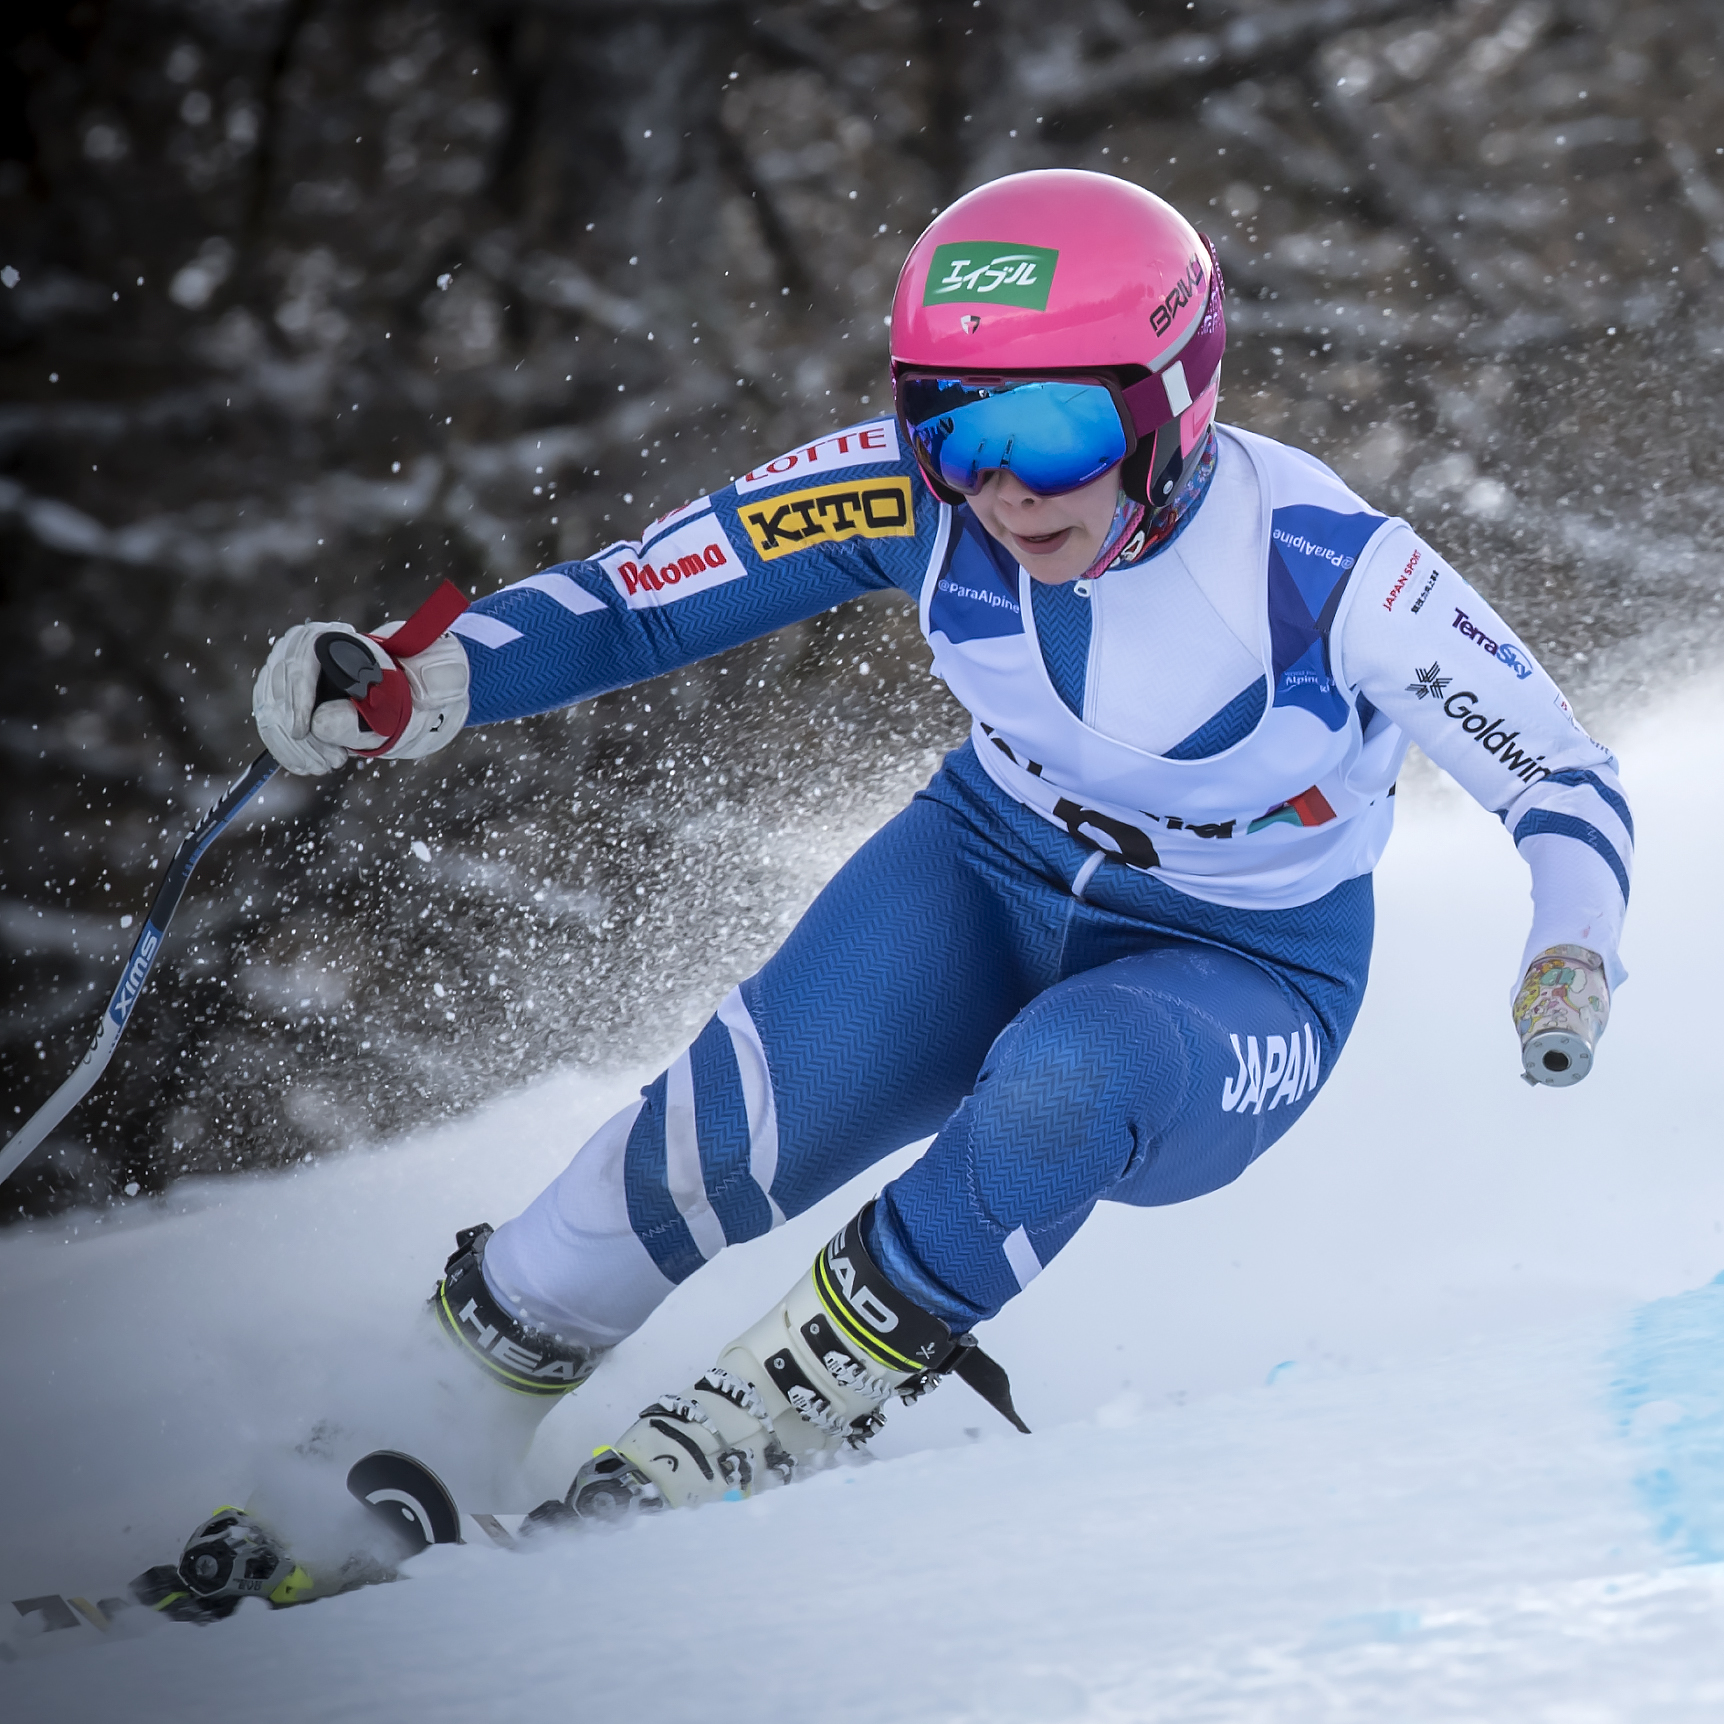 08.02.2019; Veysonnaz (Vs). World Para Alpine Skiing; Coupe du monde de Handi Ski. Slalom Geant; Ammi HONDO (JAP)
photo Jean-Guy Python